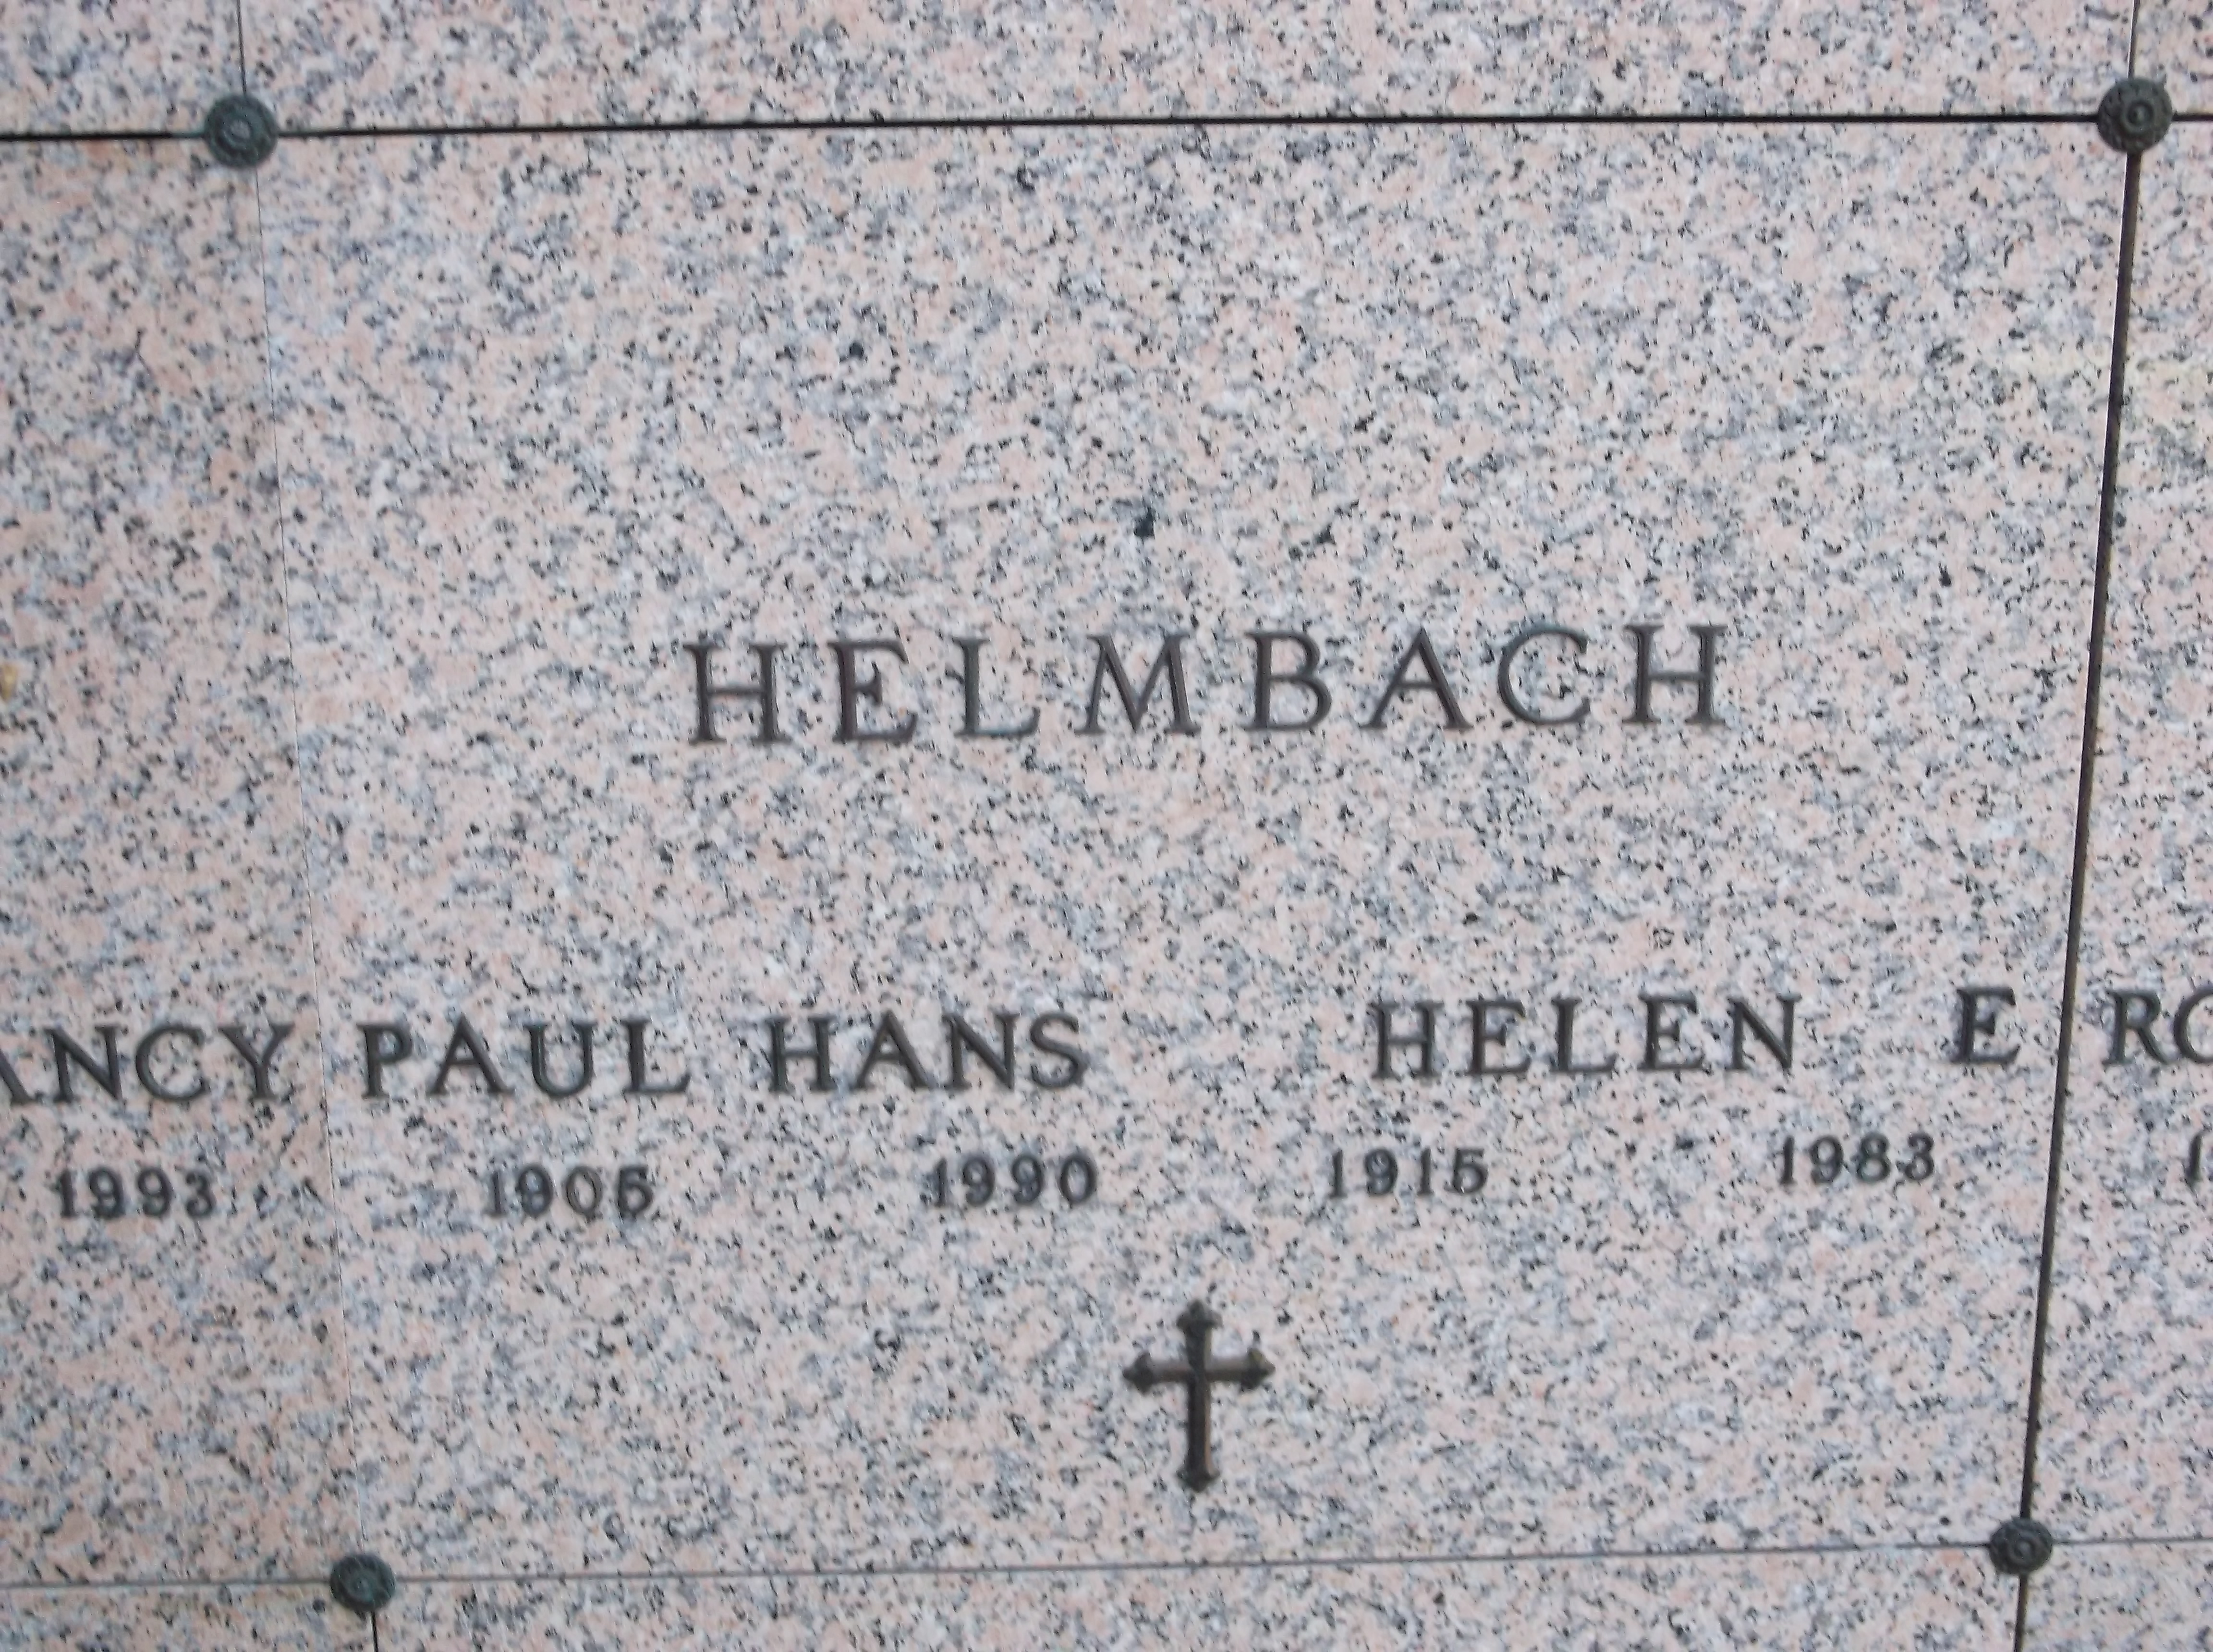 Paul Hans Helmbach